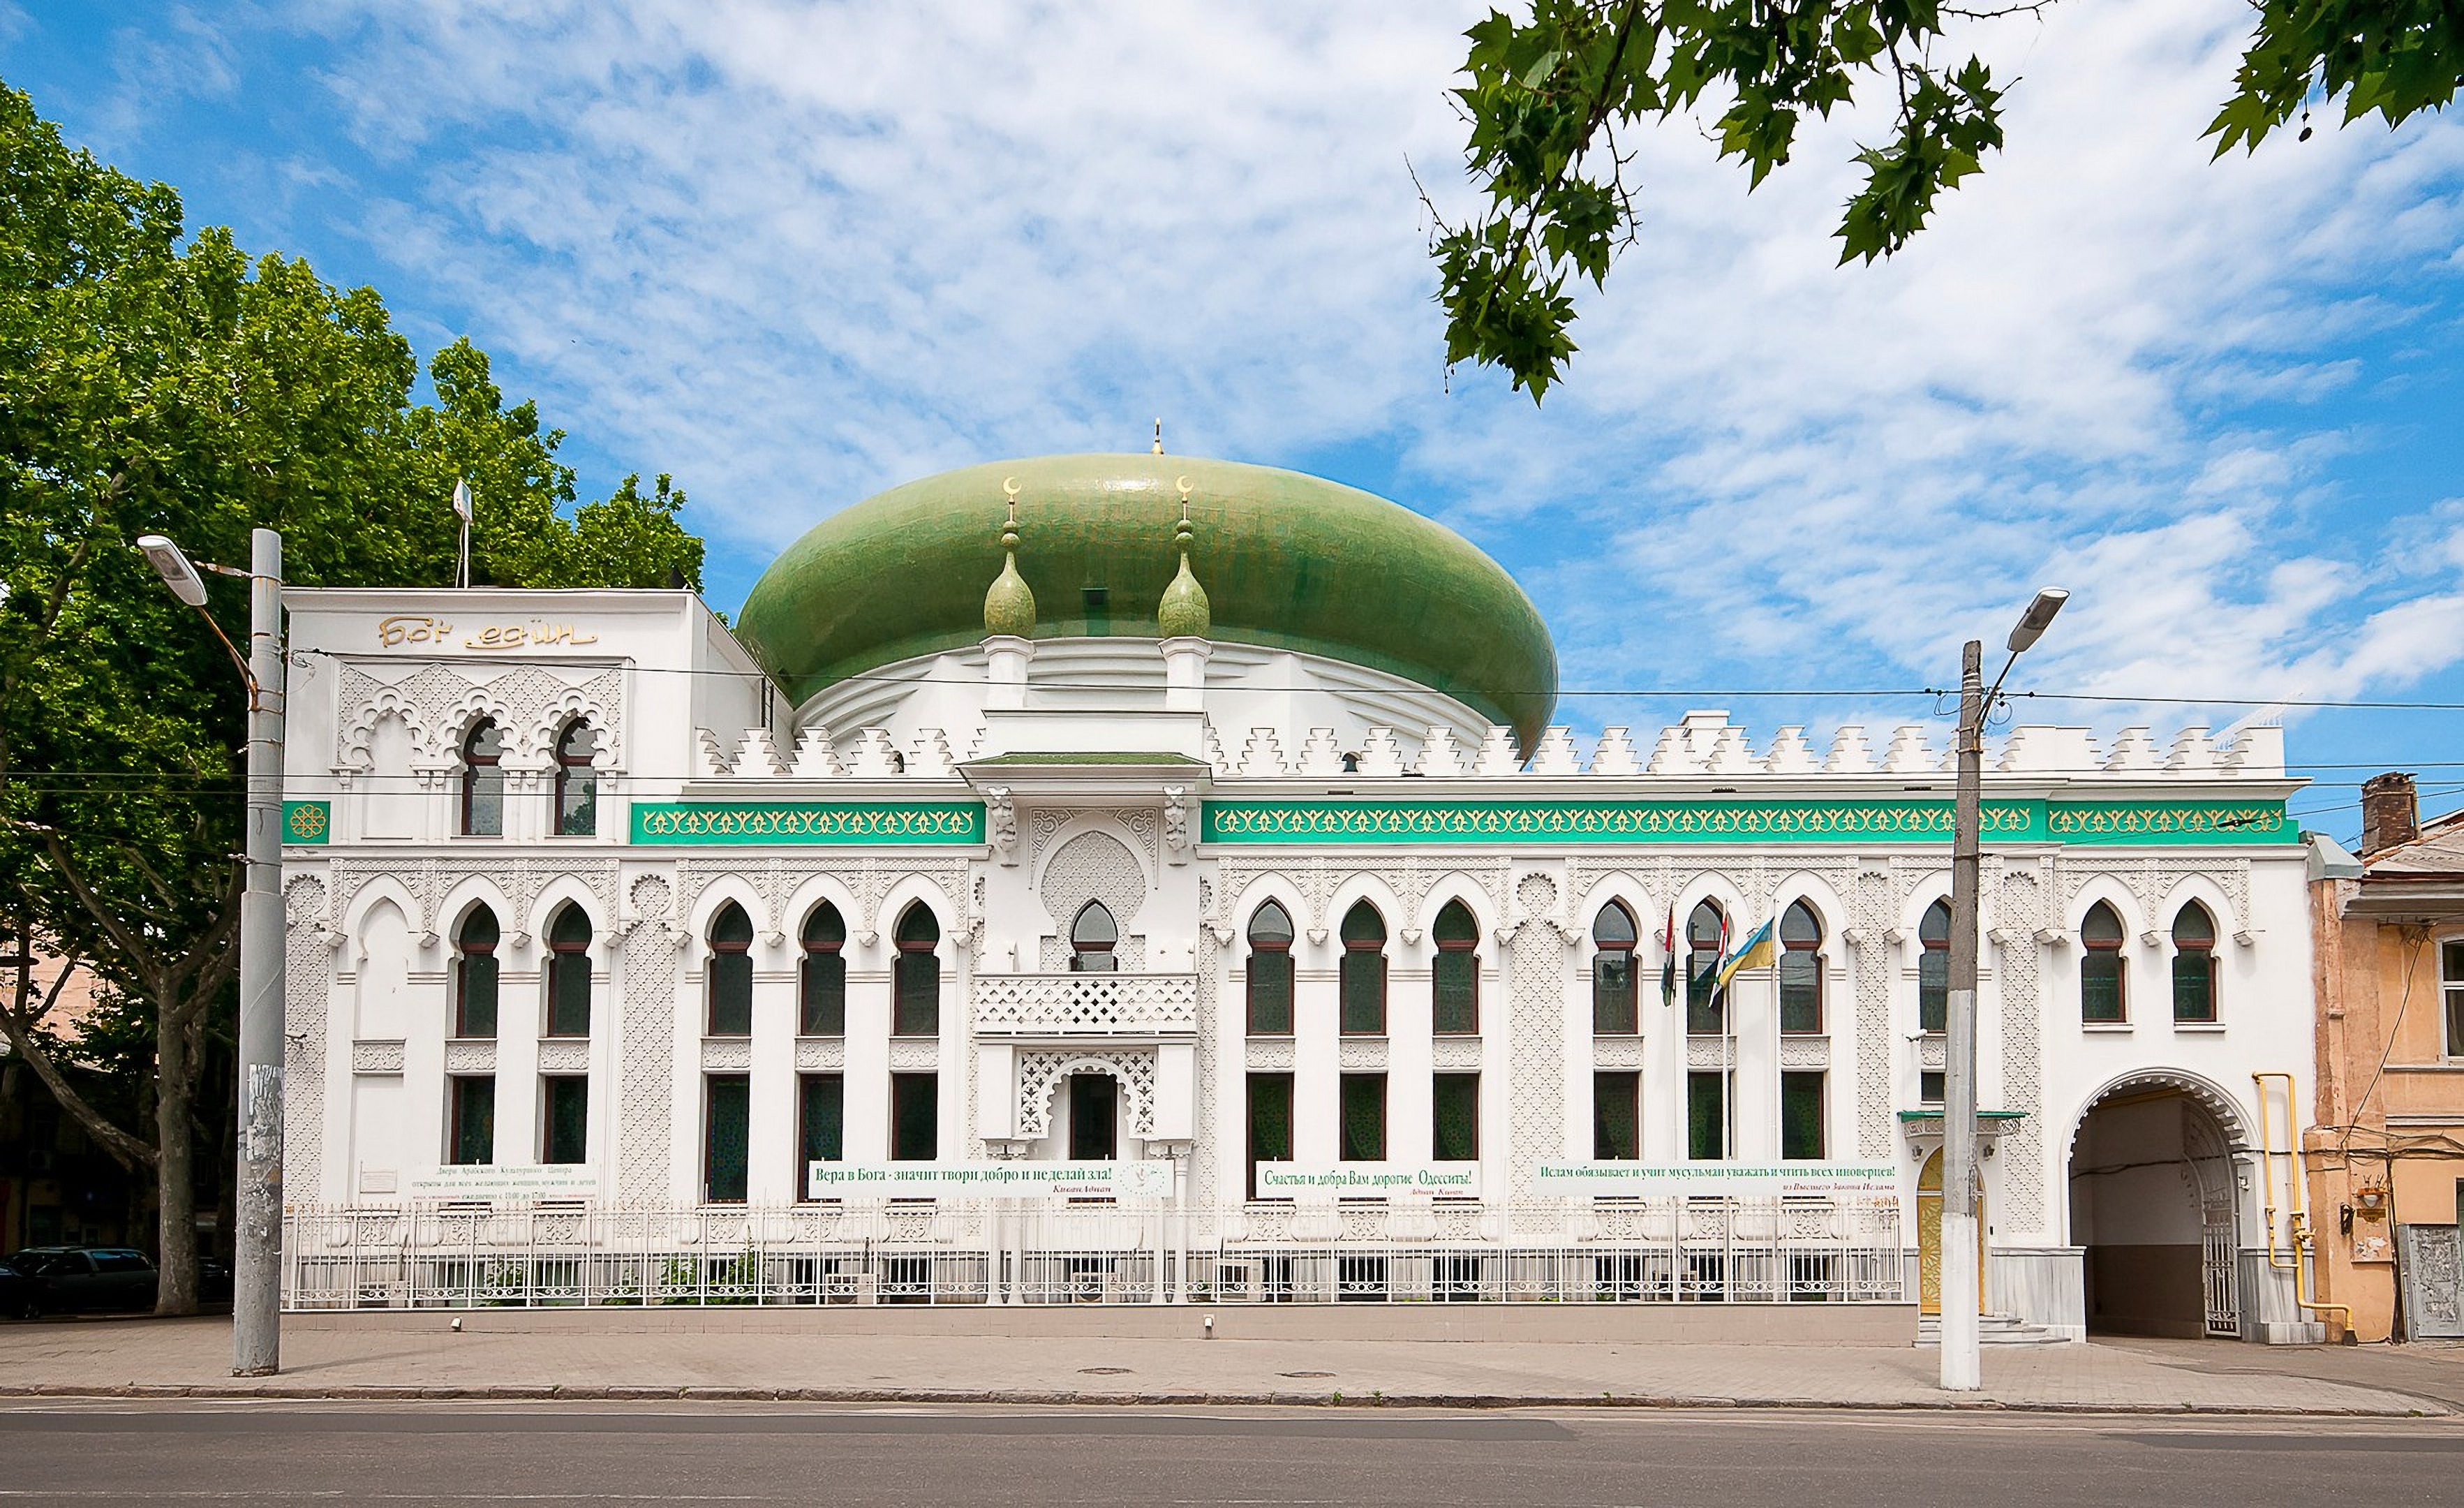 The Arab Cultural Center in Odessa